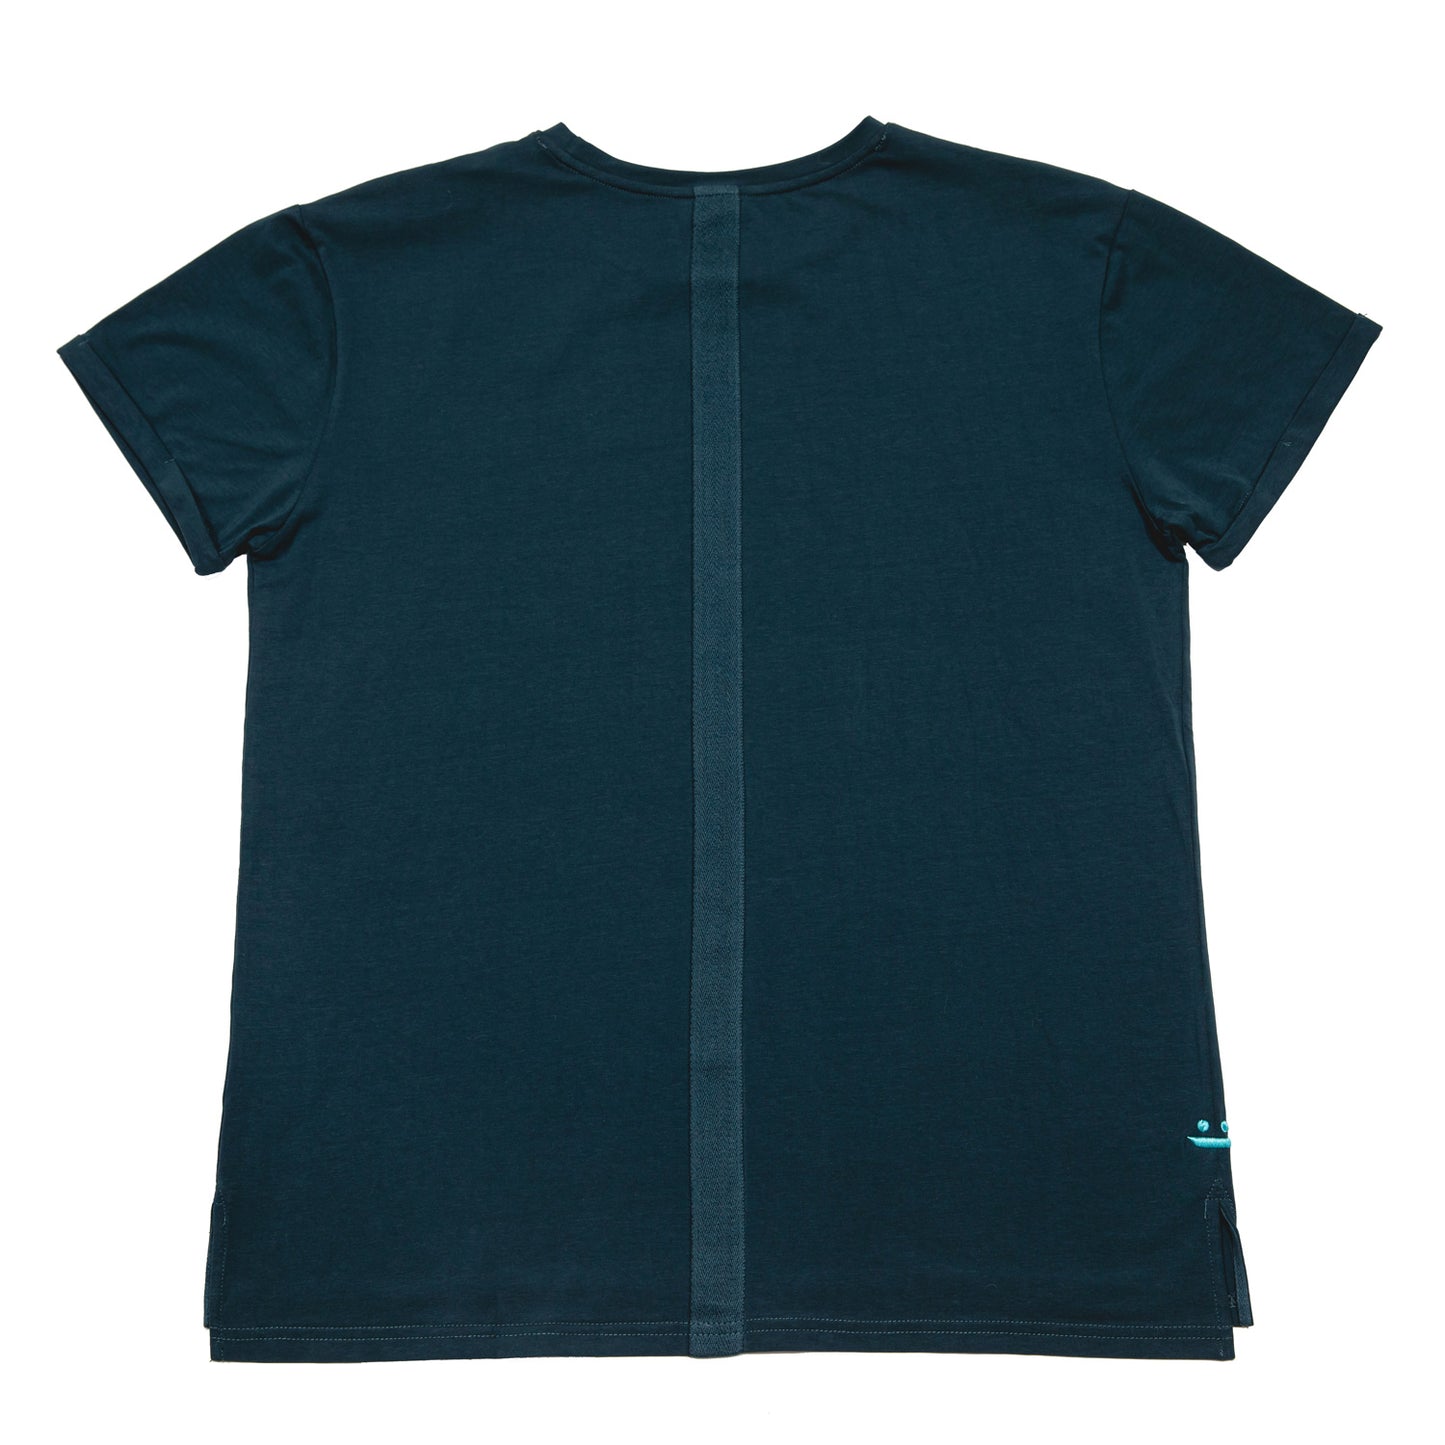 Blue Aegean, T-shirt, shirt, man, plane tee, soft cotton, sleek, back view,